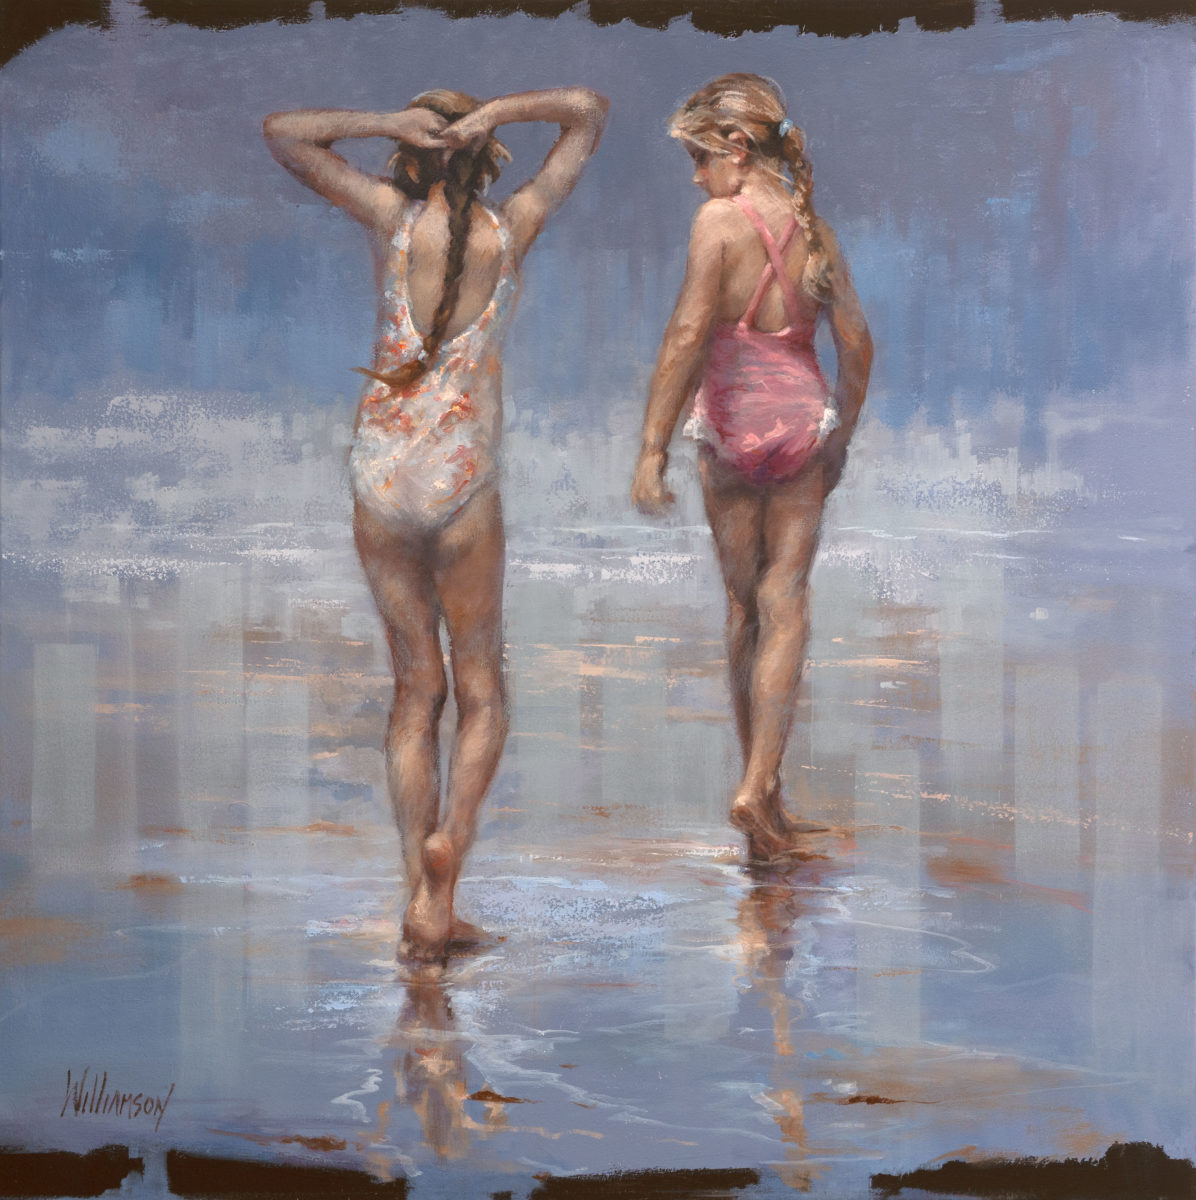 Waters edge | Jan Williamson | oil on canvas | 76 x 76 cm | $5,800